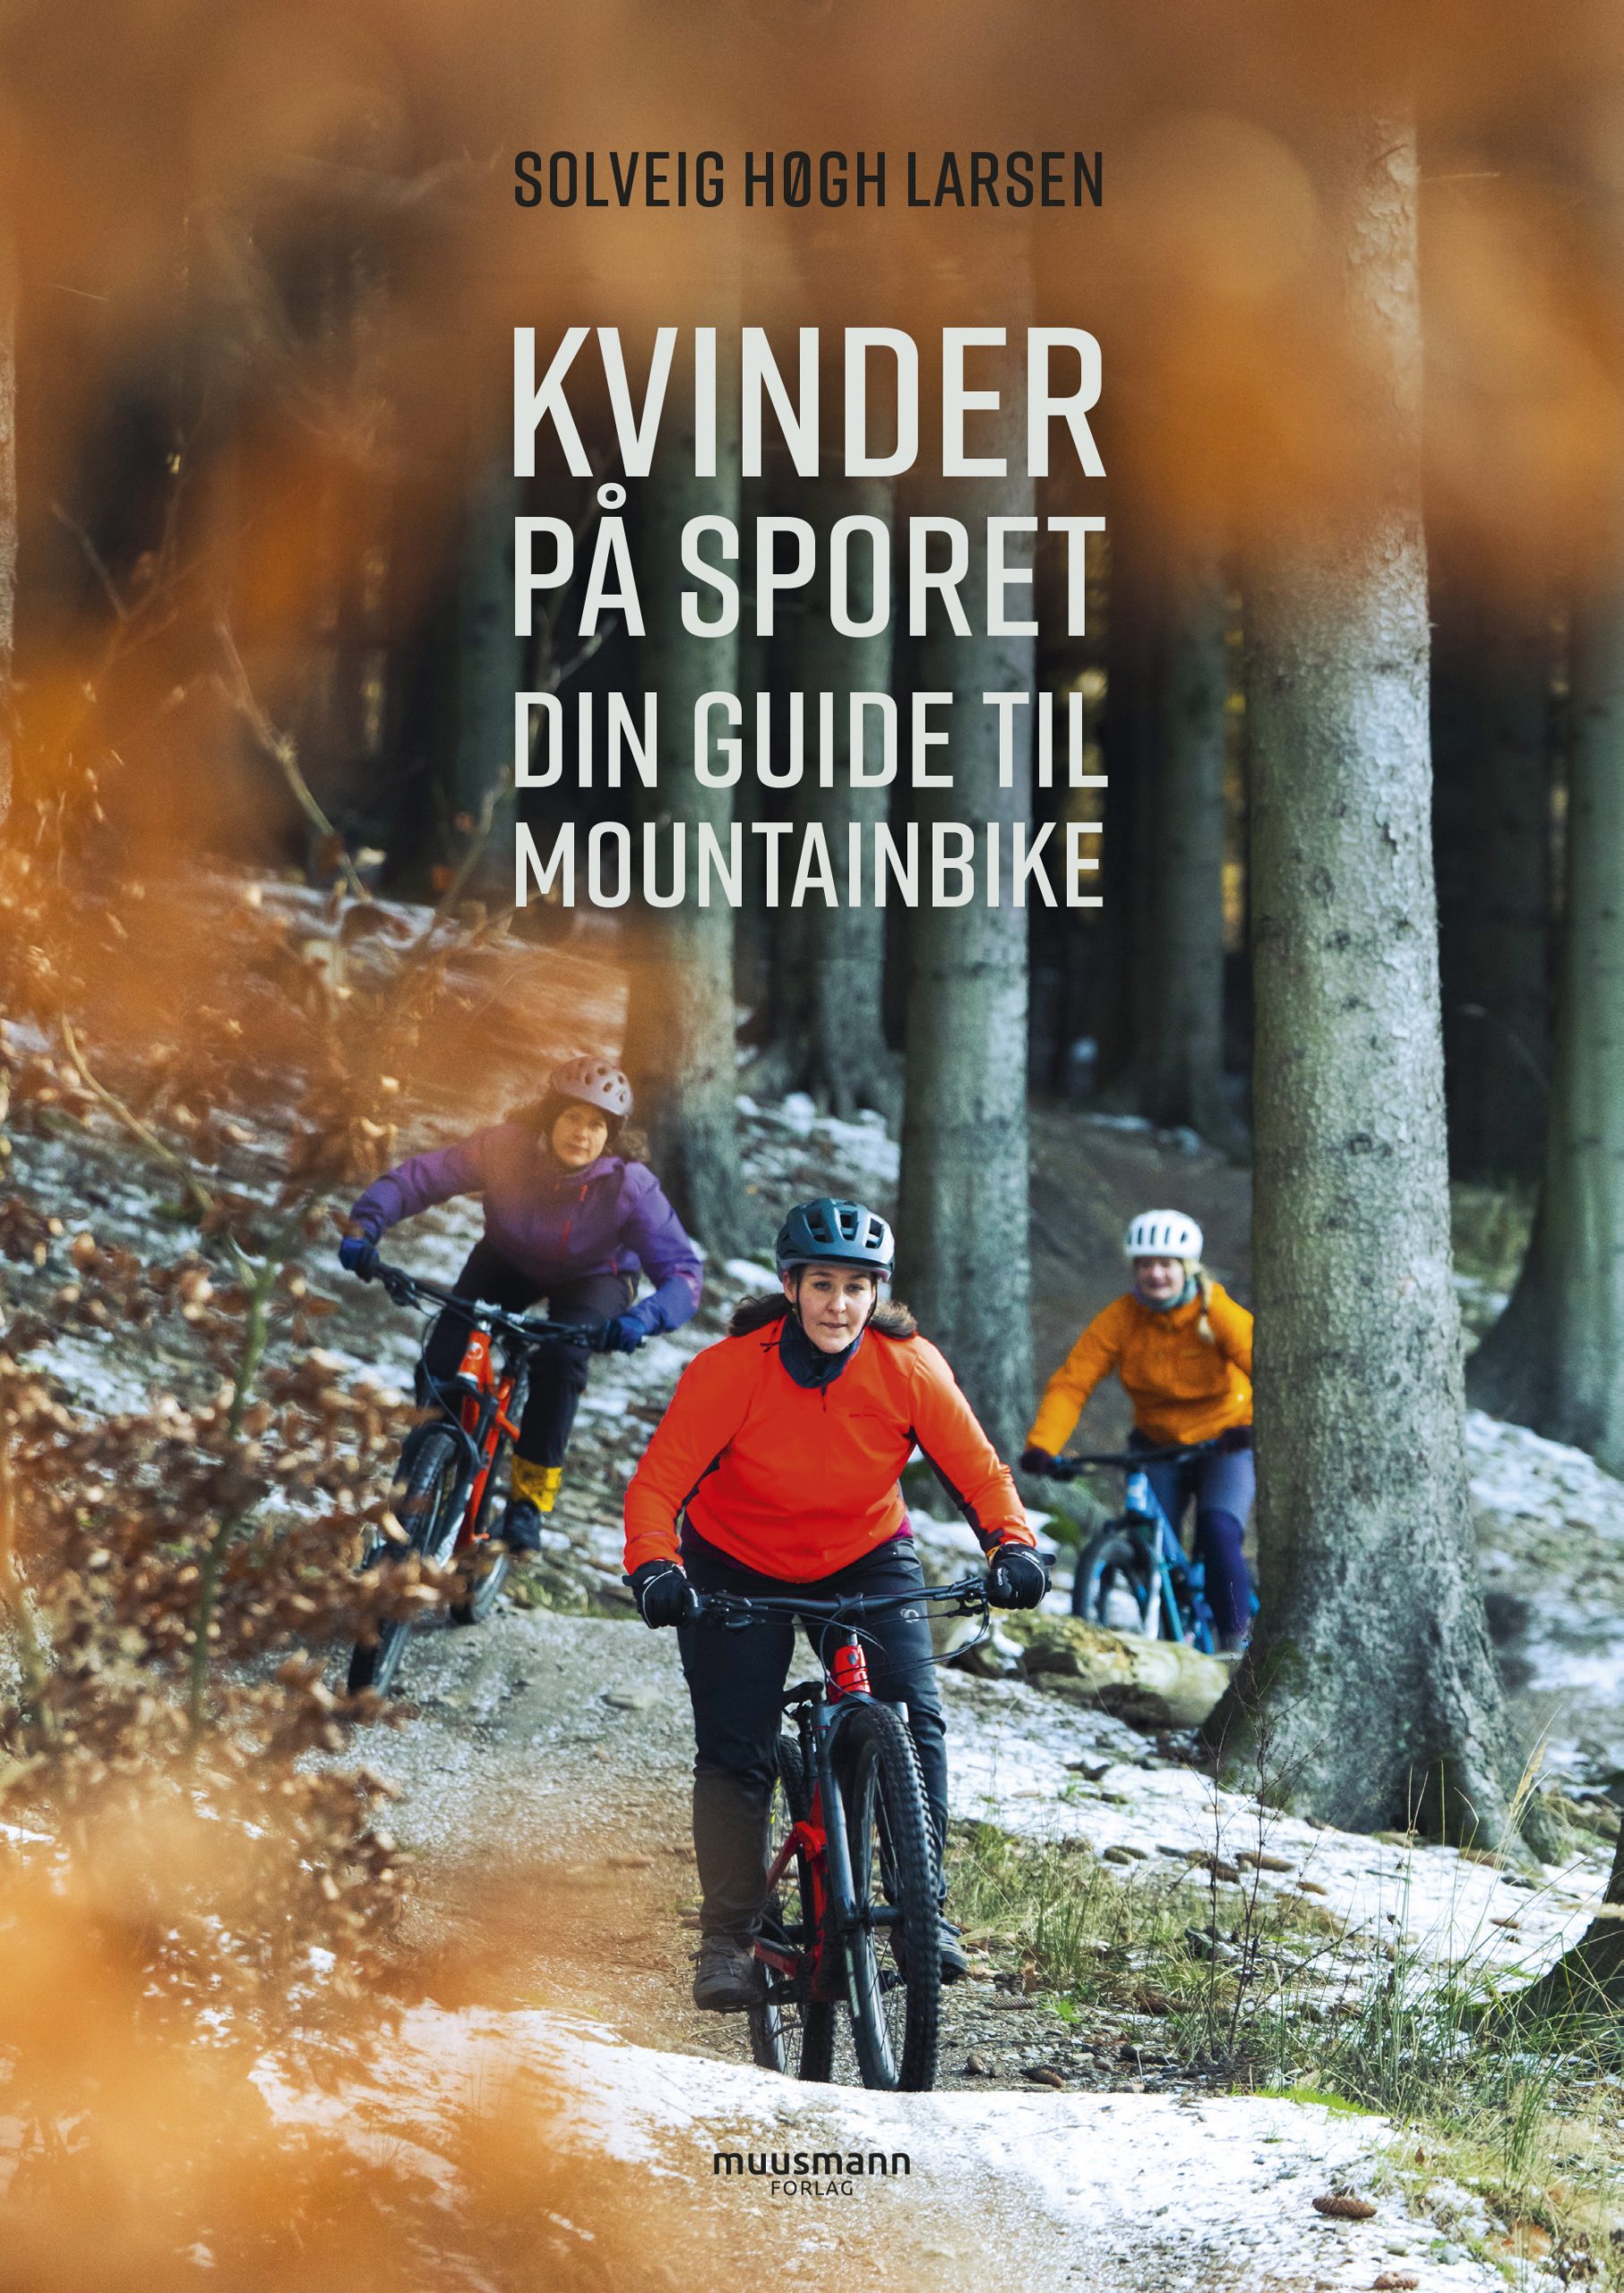 Særlig voksenalderen Bibliografi Guide til mountainbike med - Kvinder på sporet - Muusmann Forlag